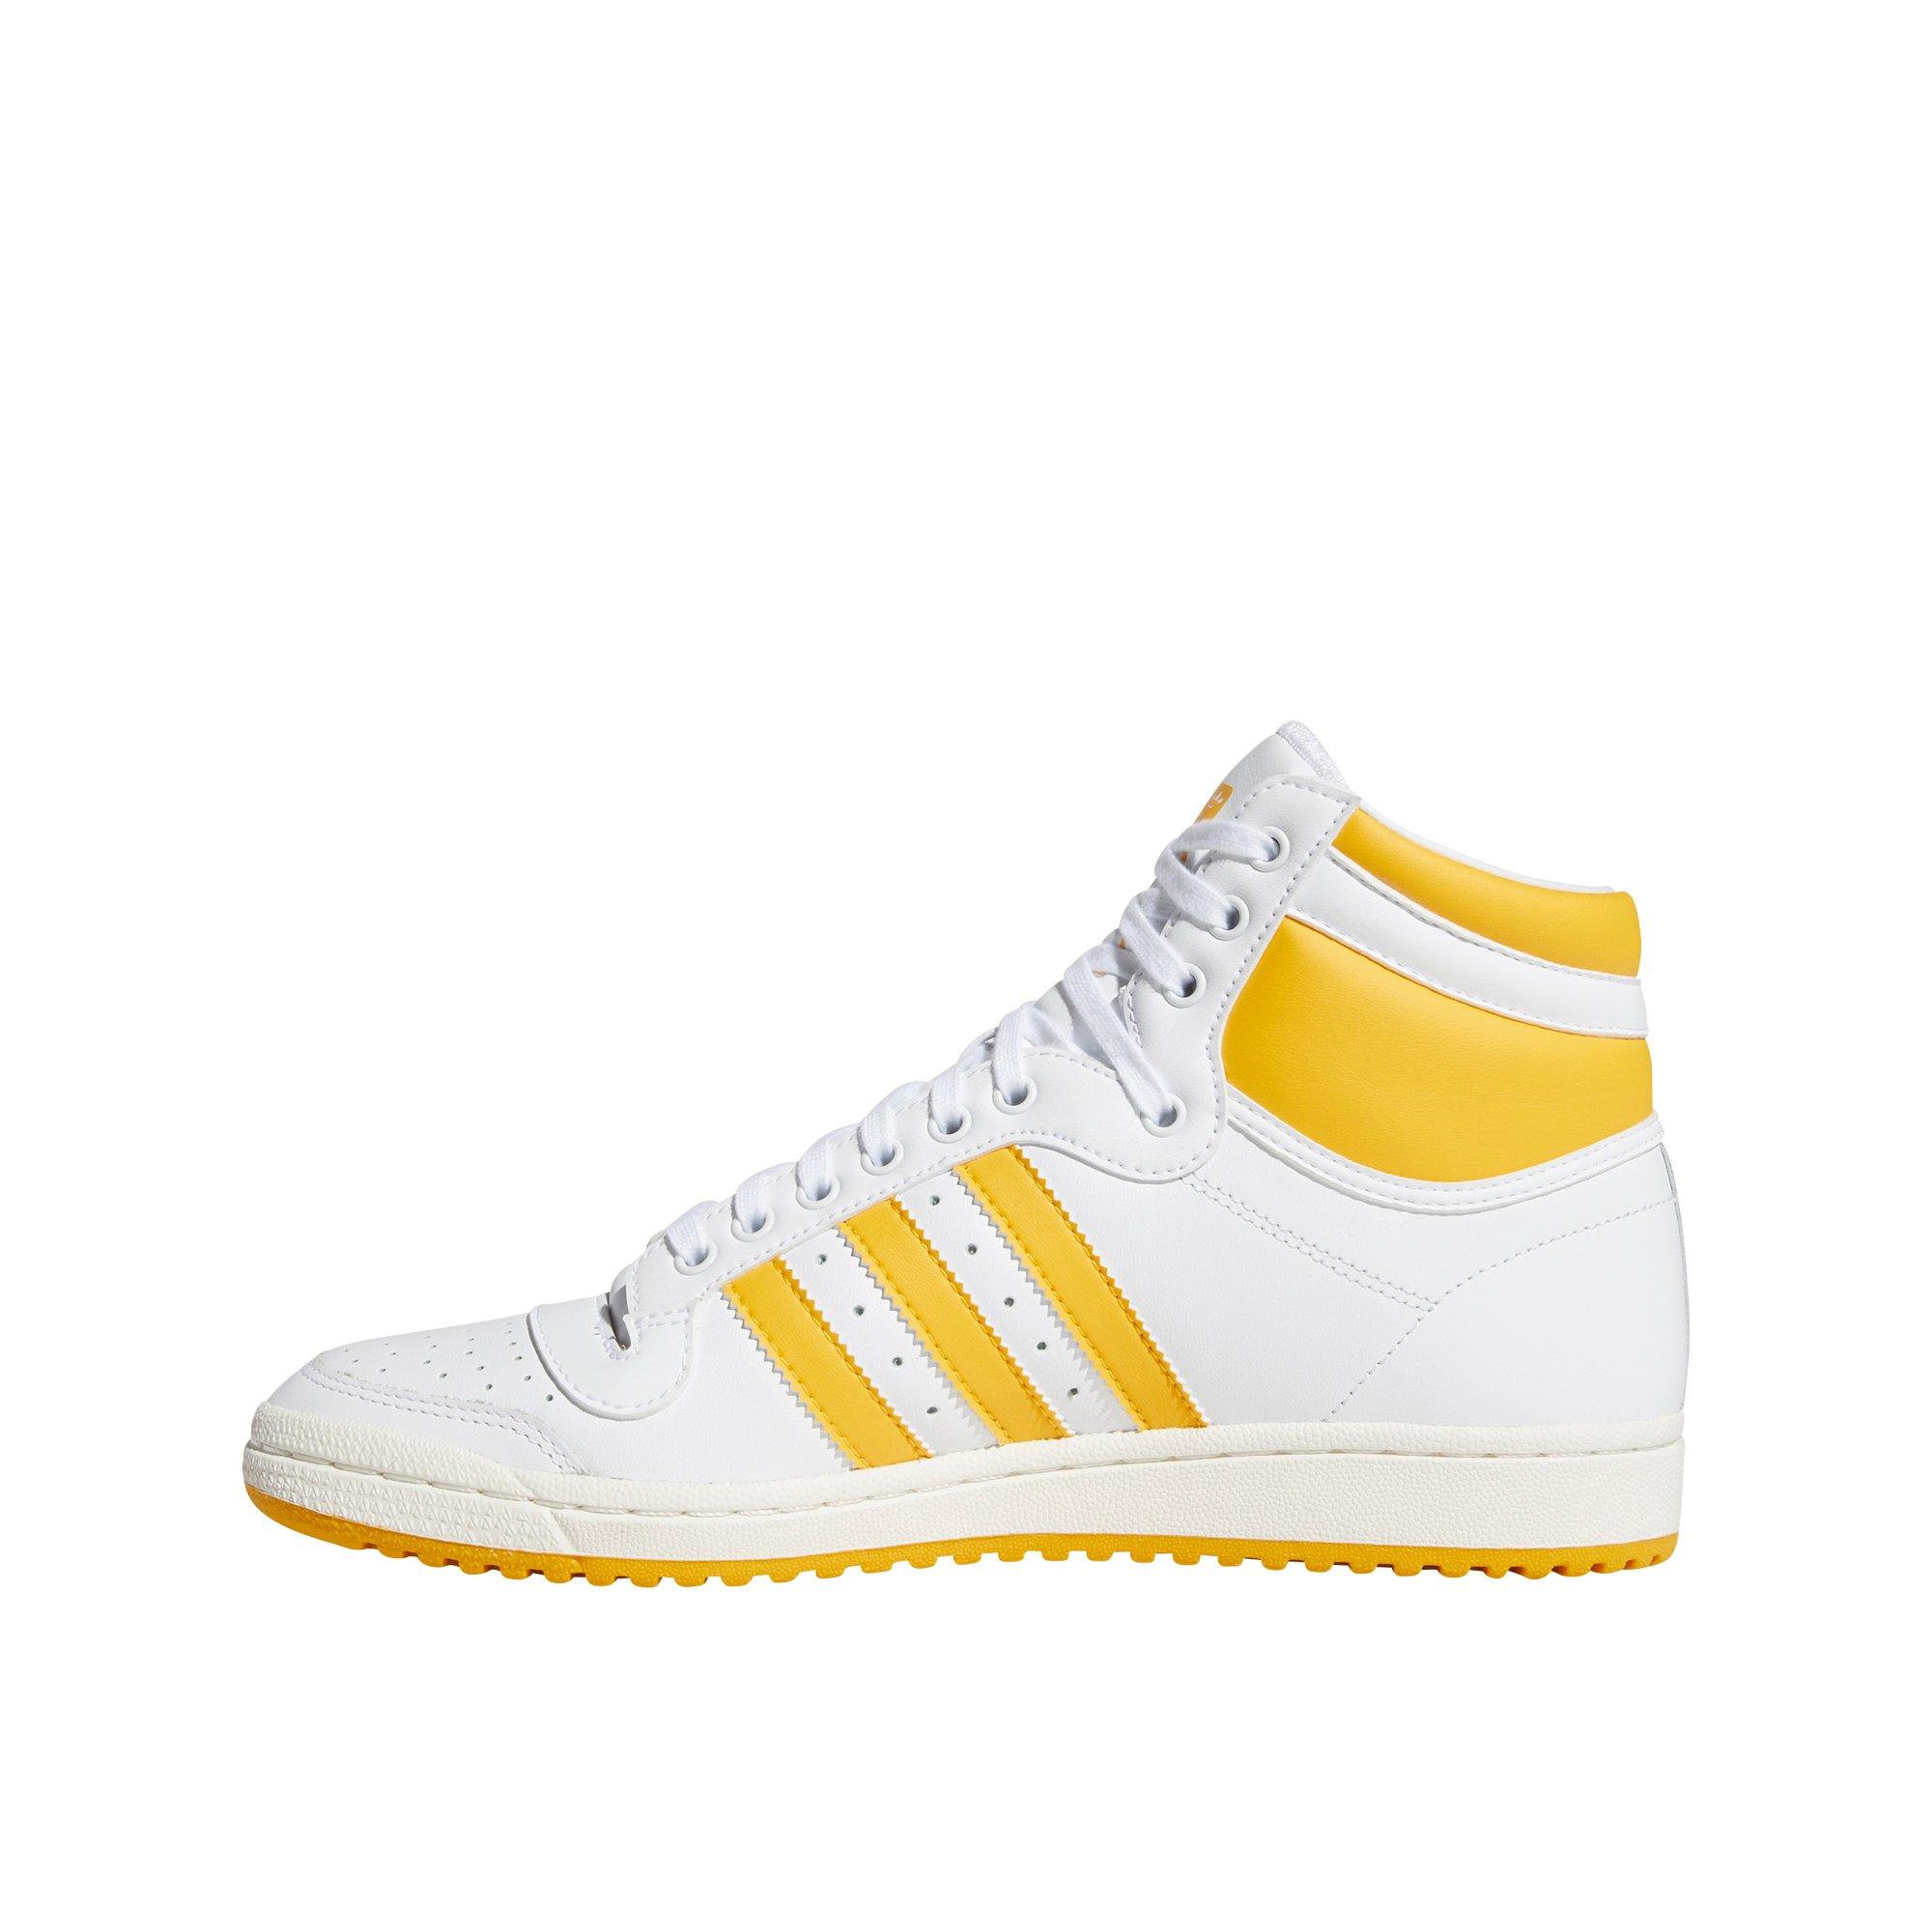 white and yellow adidas top ten